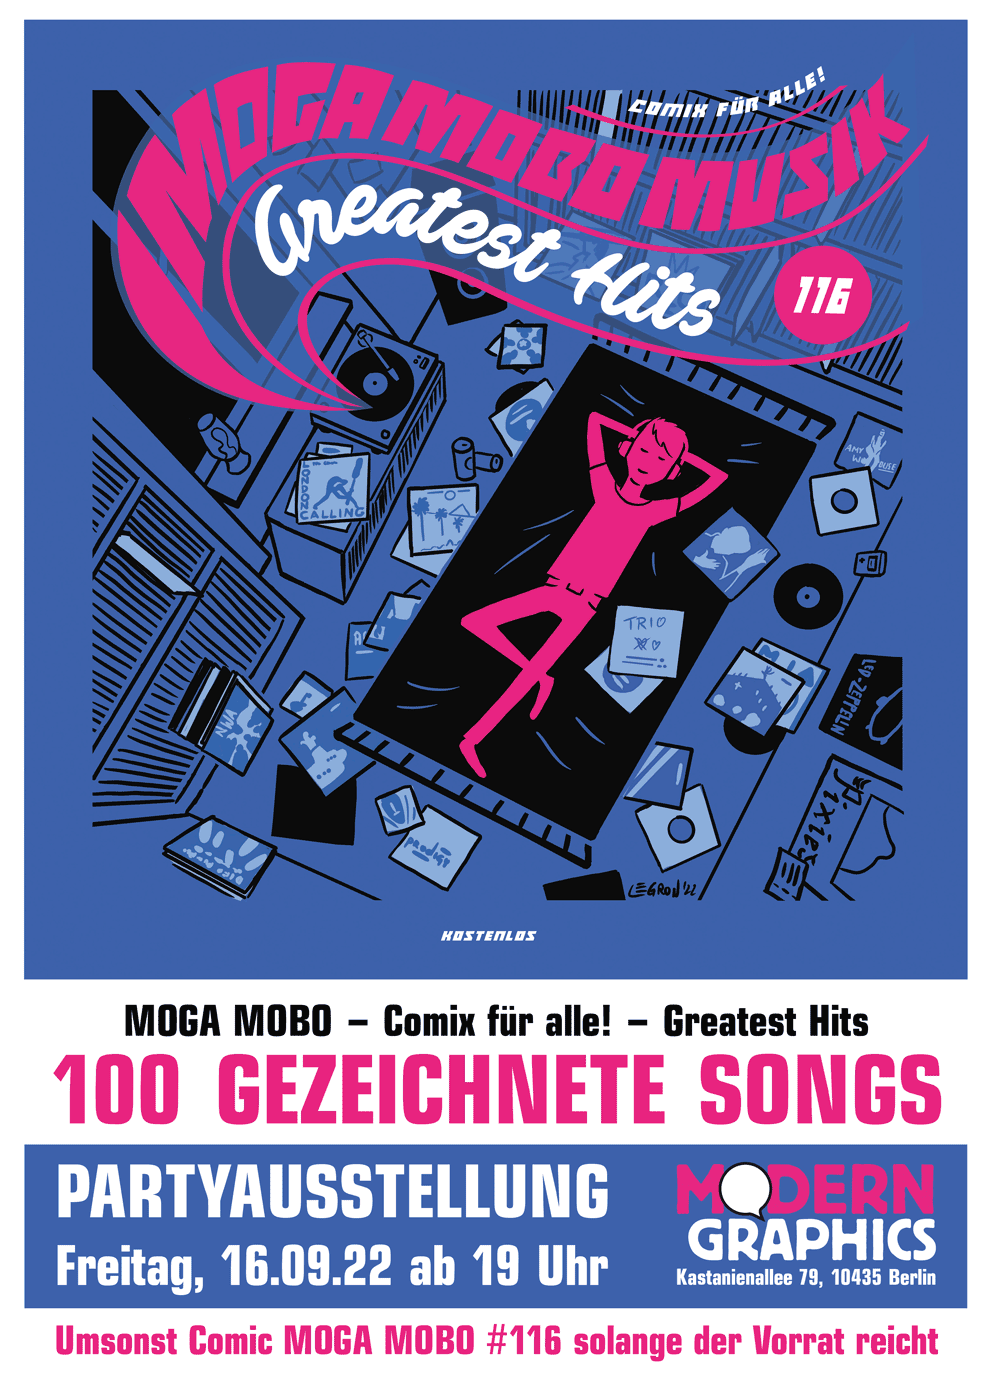 »Moga Mobo Greatest Hits«: Partyausstellung , 16.09.22, 19:00 Uhr, Modern Graphics, Kastanienallee 79, 10435 Berlin